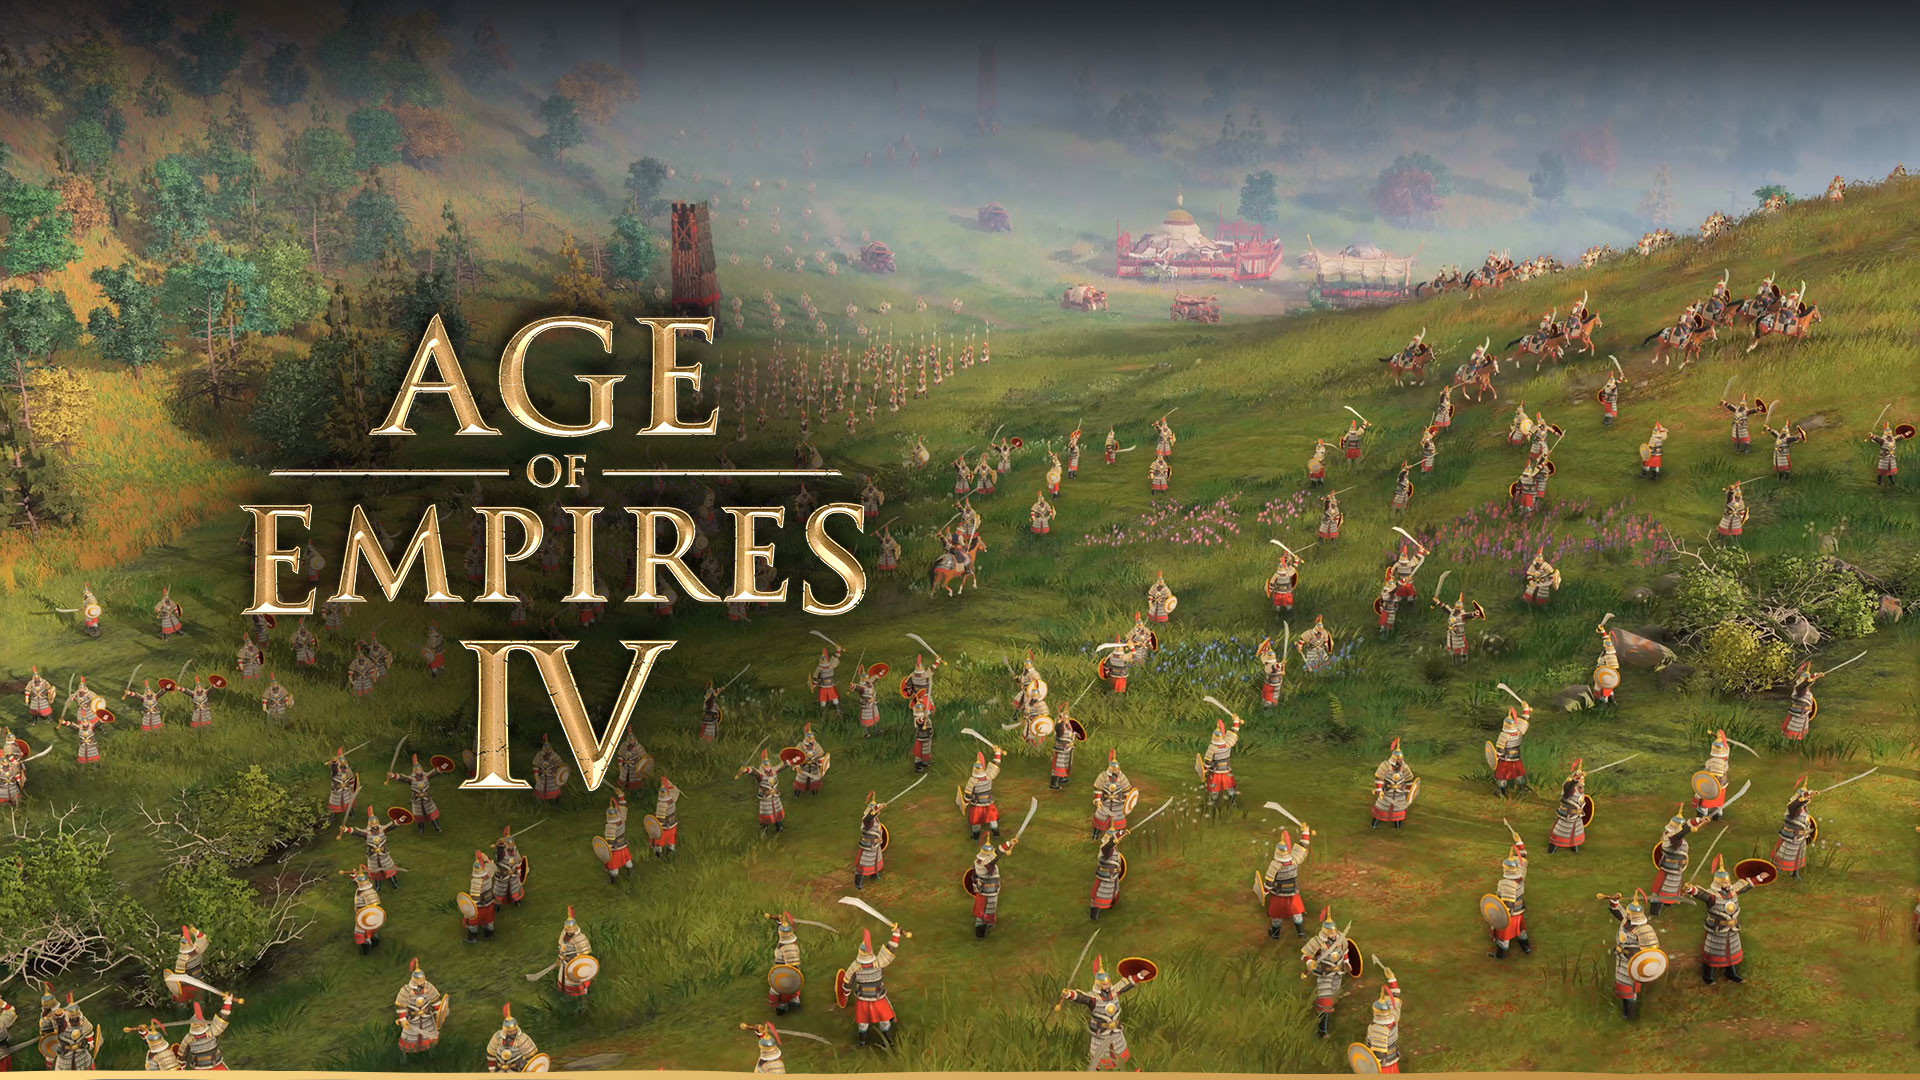 Giới thiệu về Age of Empires